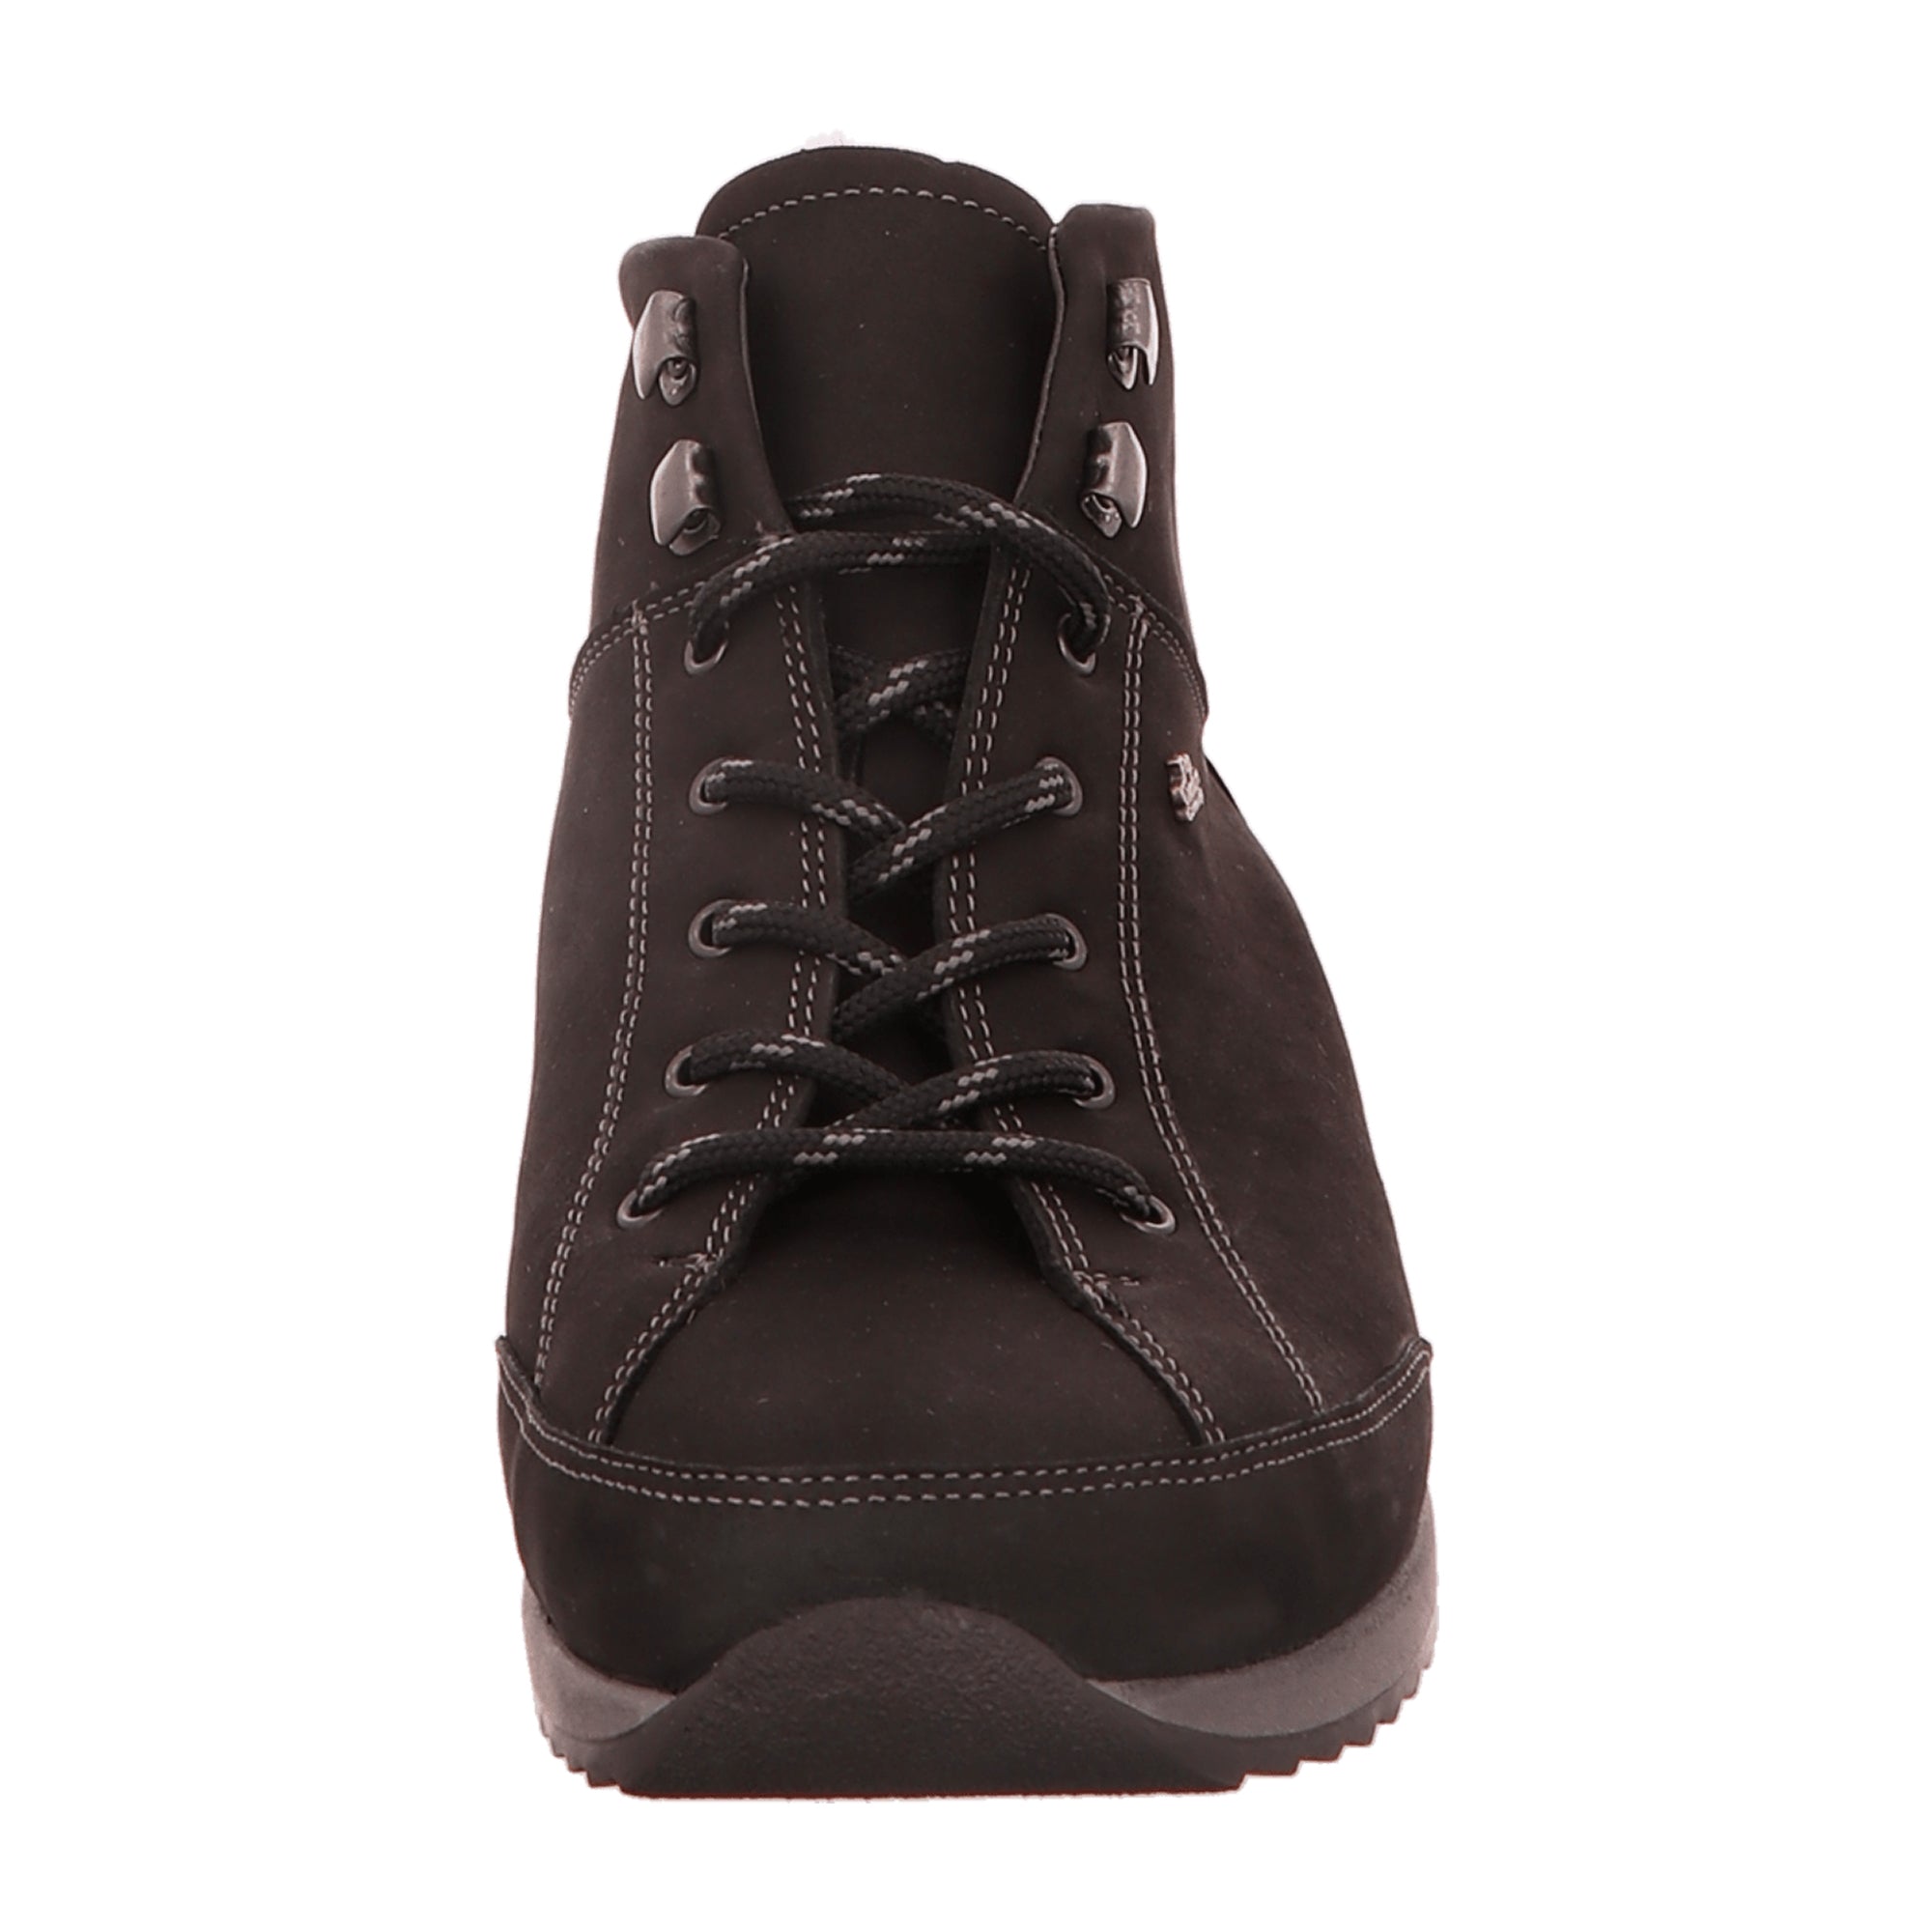 Finn Comfort Merano Women's Brown Comfort Shoes - Stylish & Durable